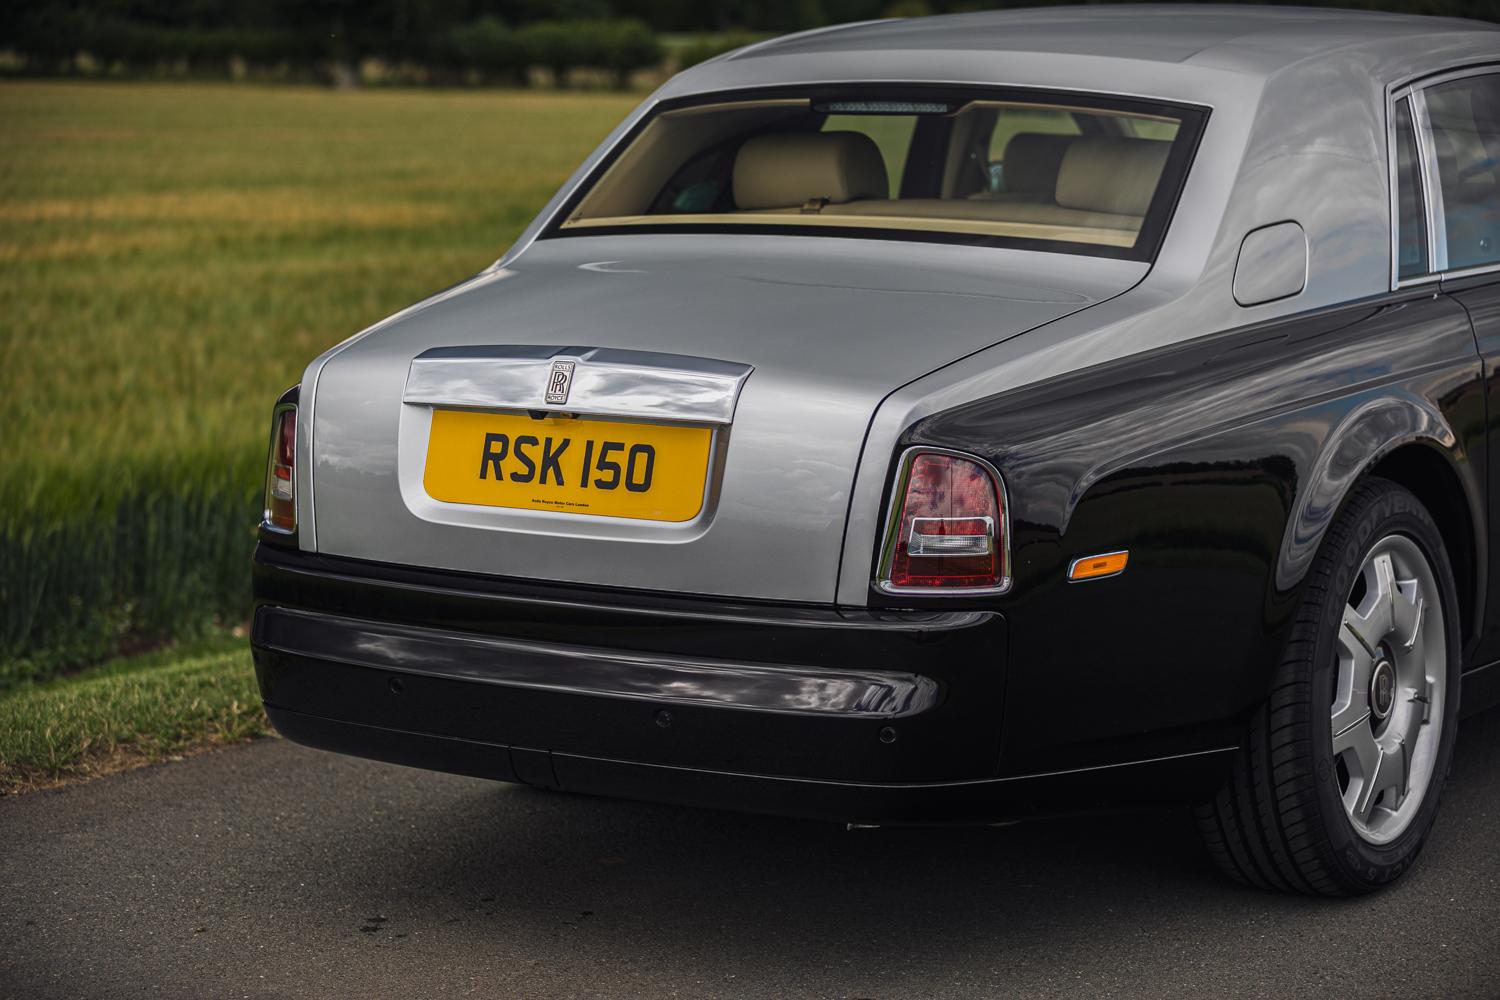 2007 Rolls-Royce Phantom VII Saloon